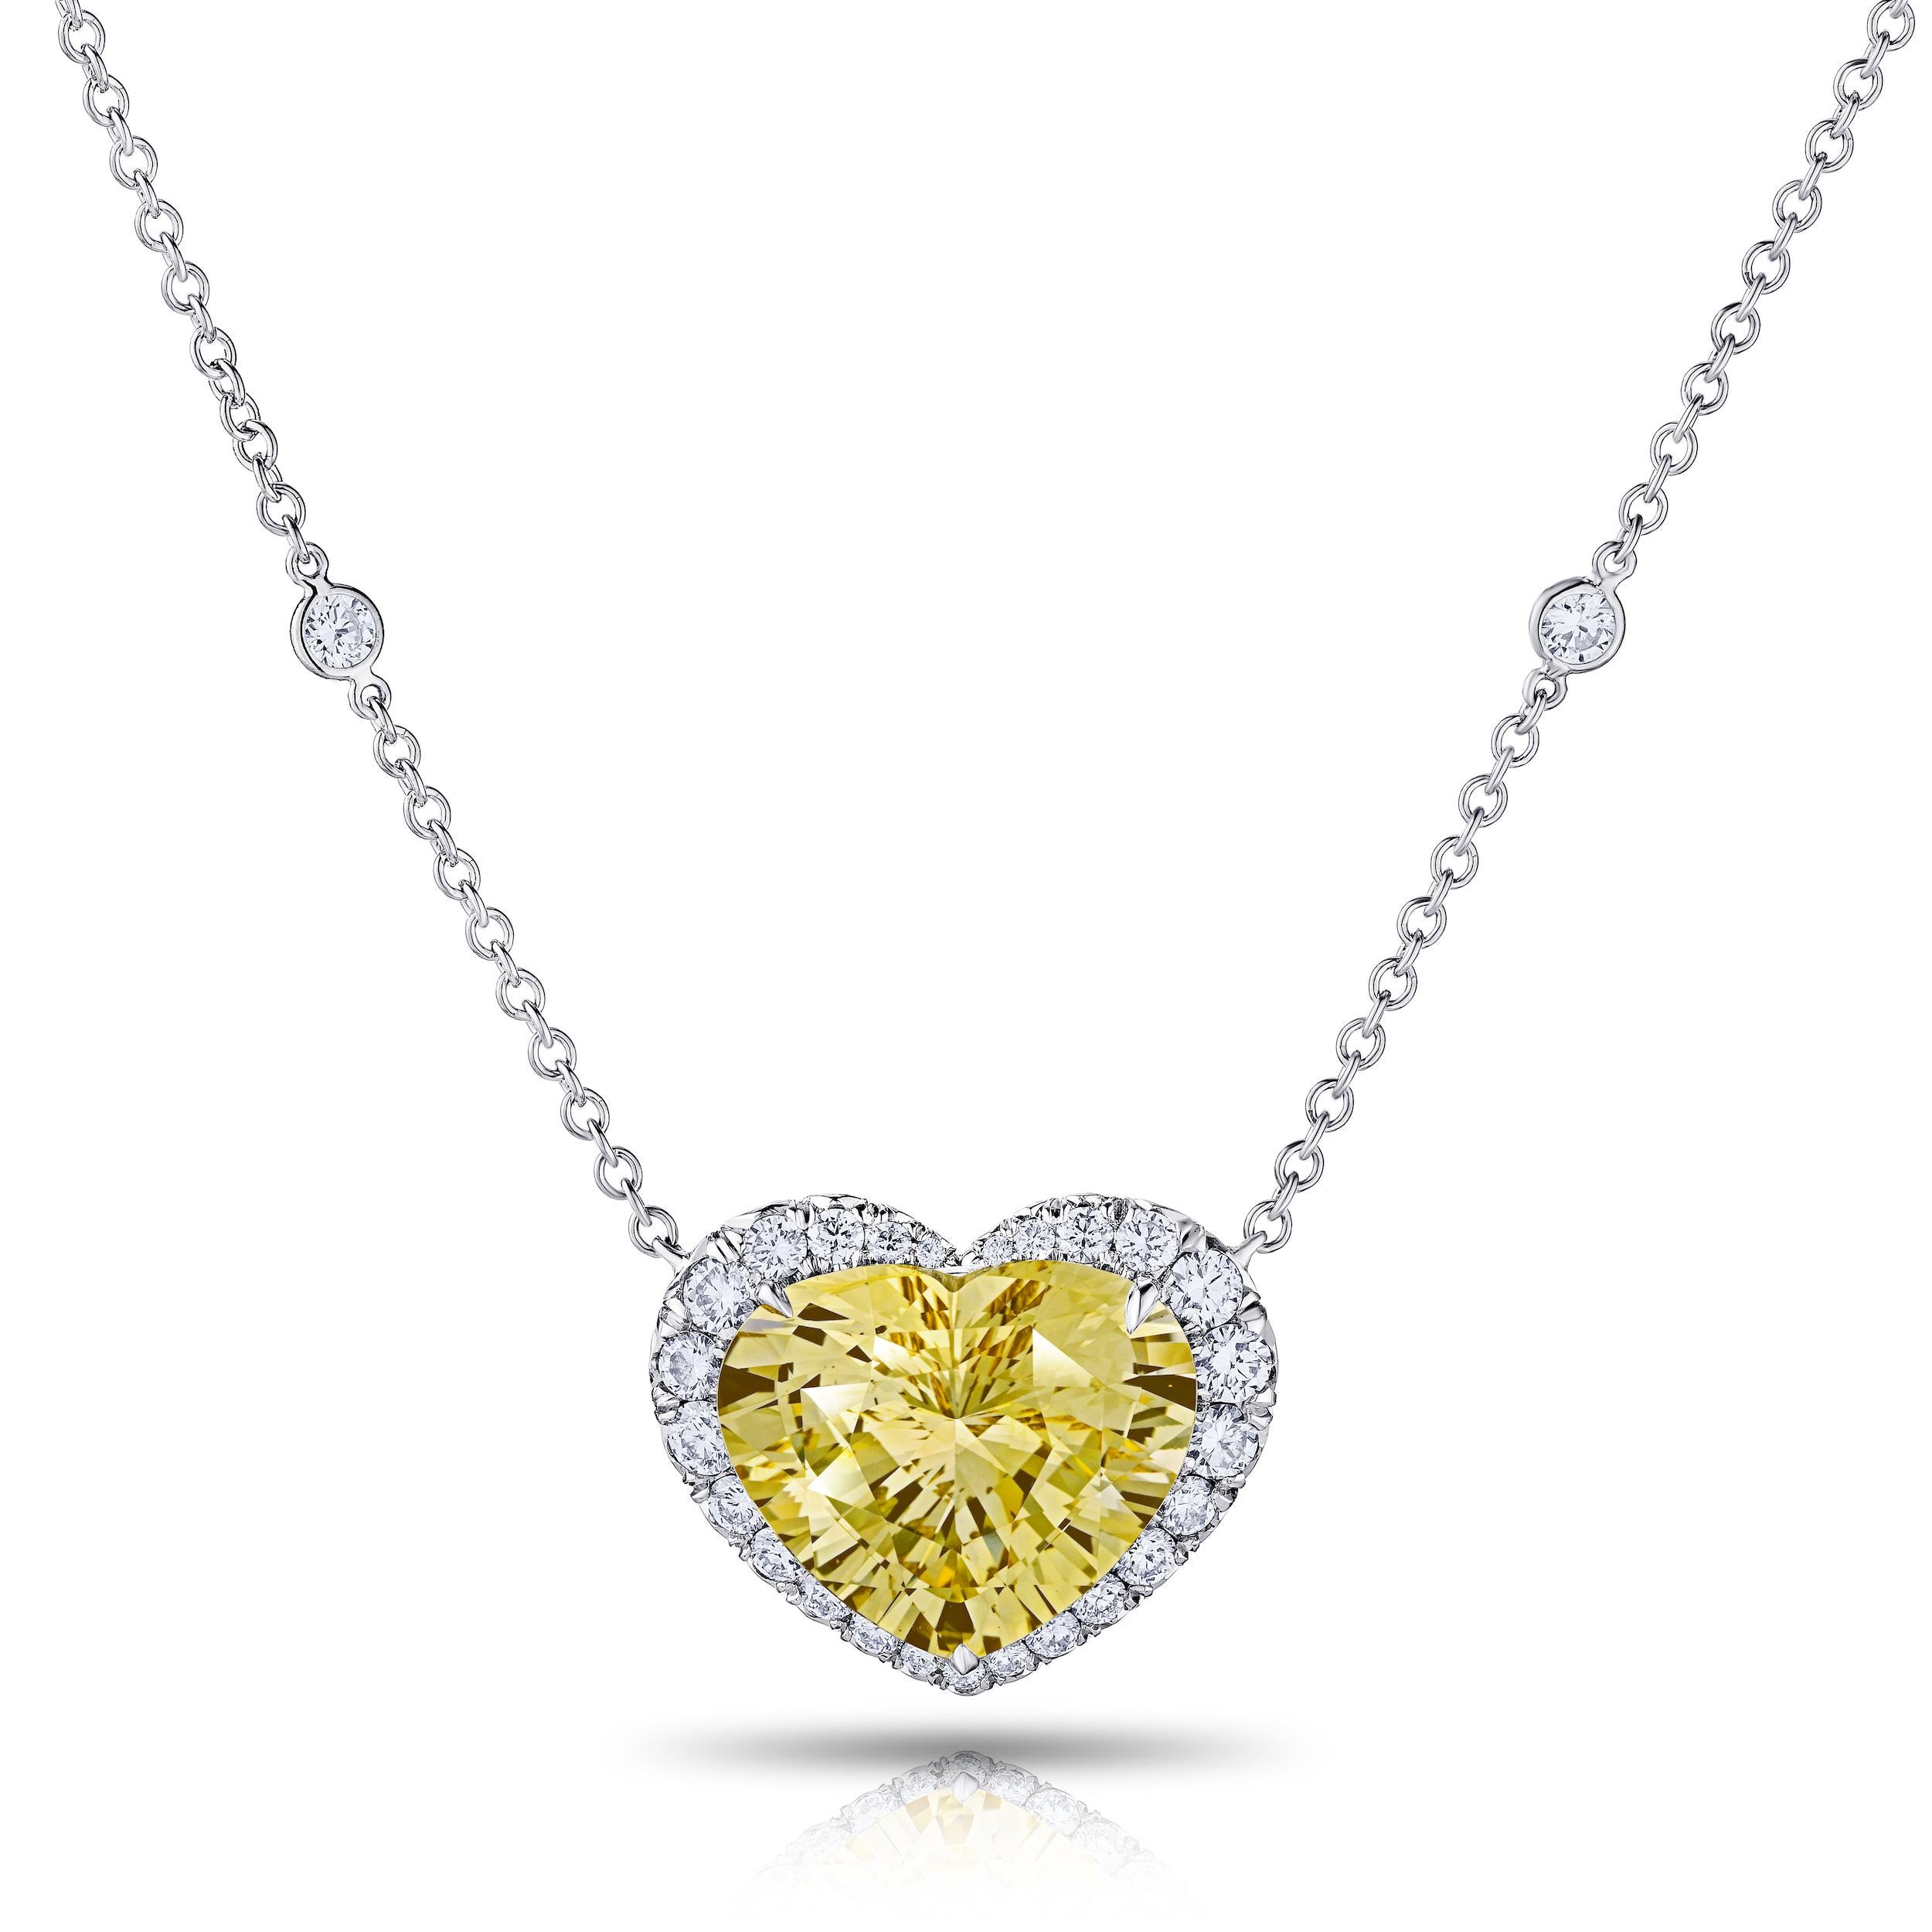 12.31 Carat Heart Shaped Yellow Sapphire NH with round brilliant cut diamonds 1.17 Carats set in handmade platinum pendant.